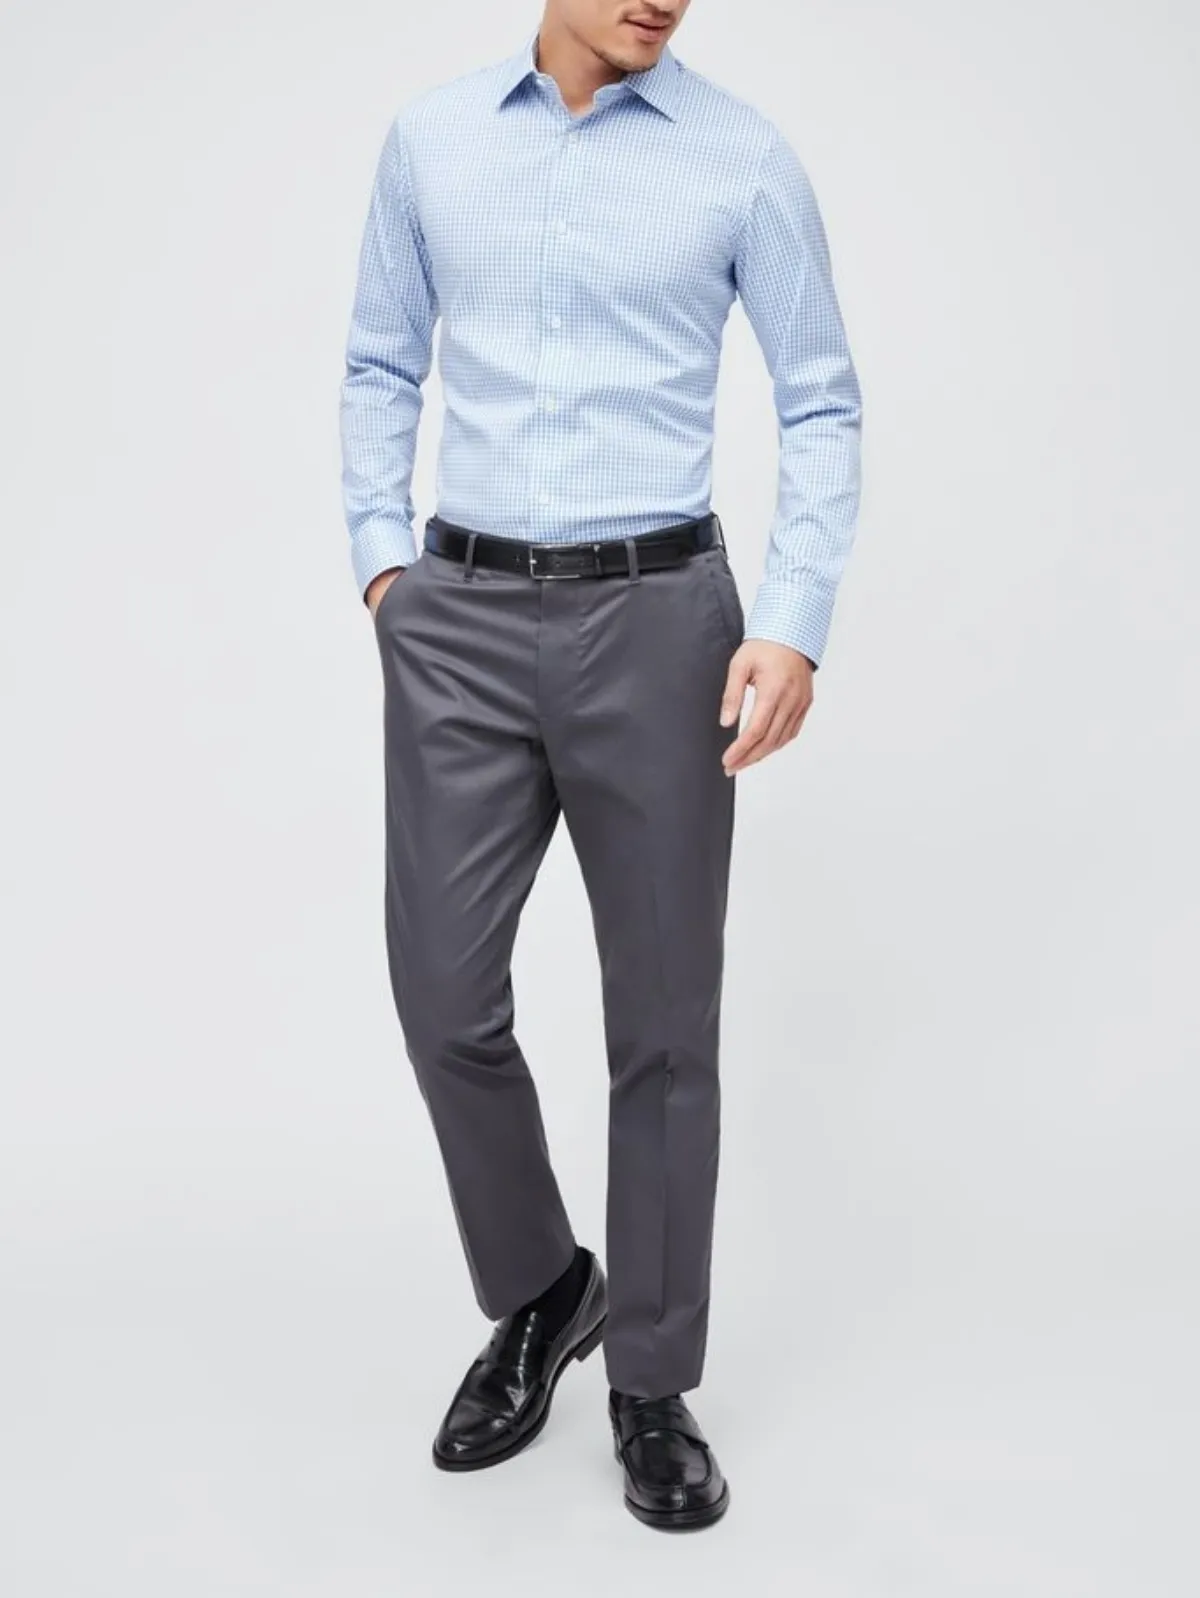 Light blue shirt with dark grey pants